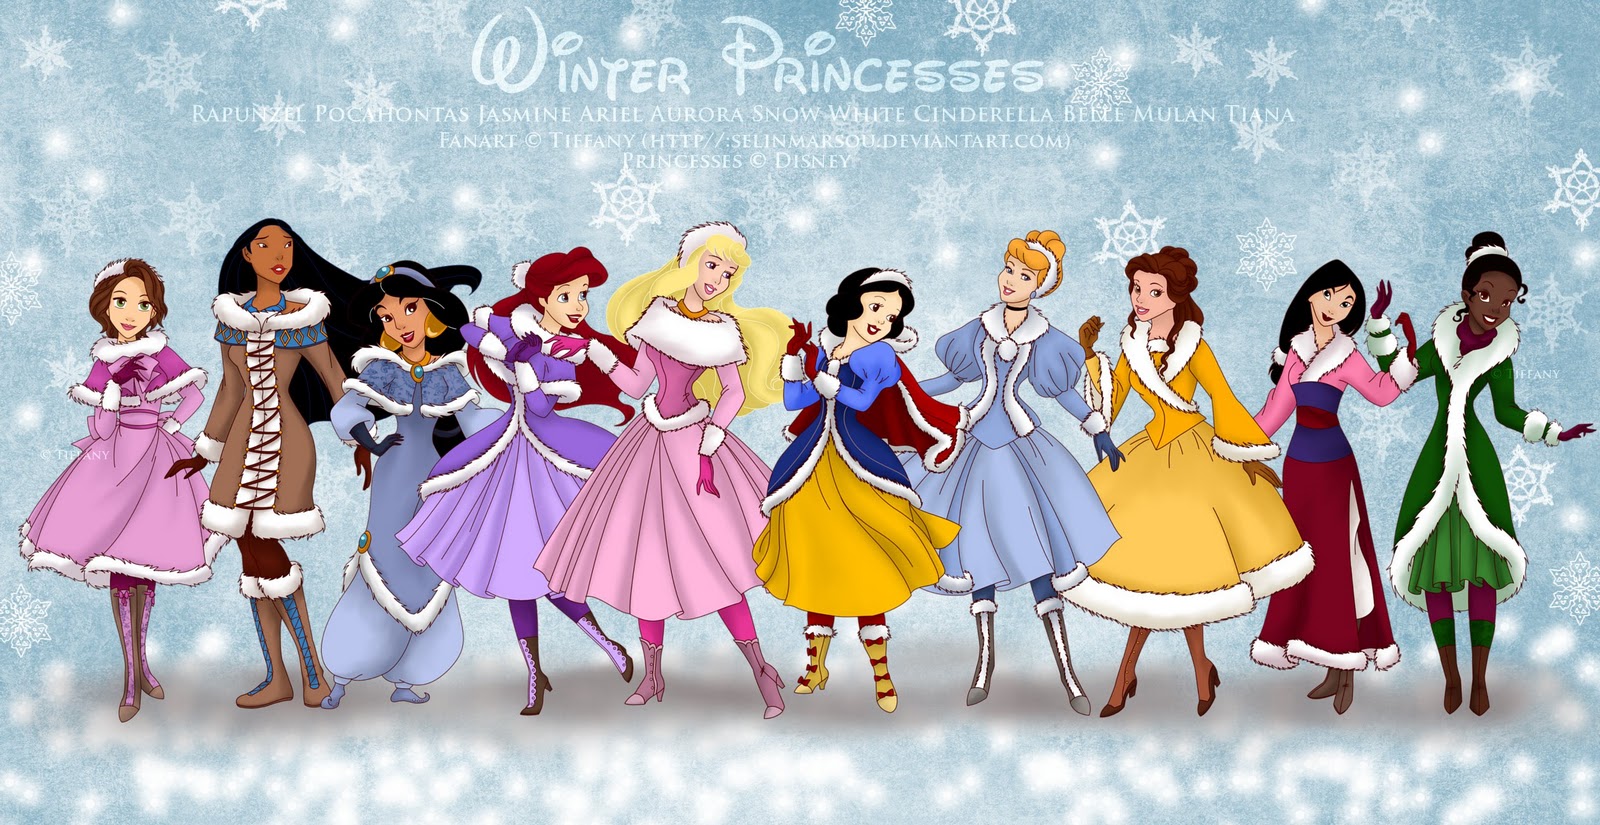 http://3.bp.blogspot.com/-IKALUHAnstk/Tylupk0SNOI/AAAAAAAADkI/7bO5mrQnvgg/s1600/Princesas_Disney__winter_princesses_by_selinmarsou.jpg